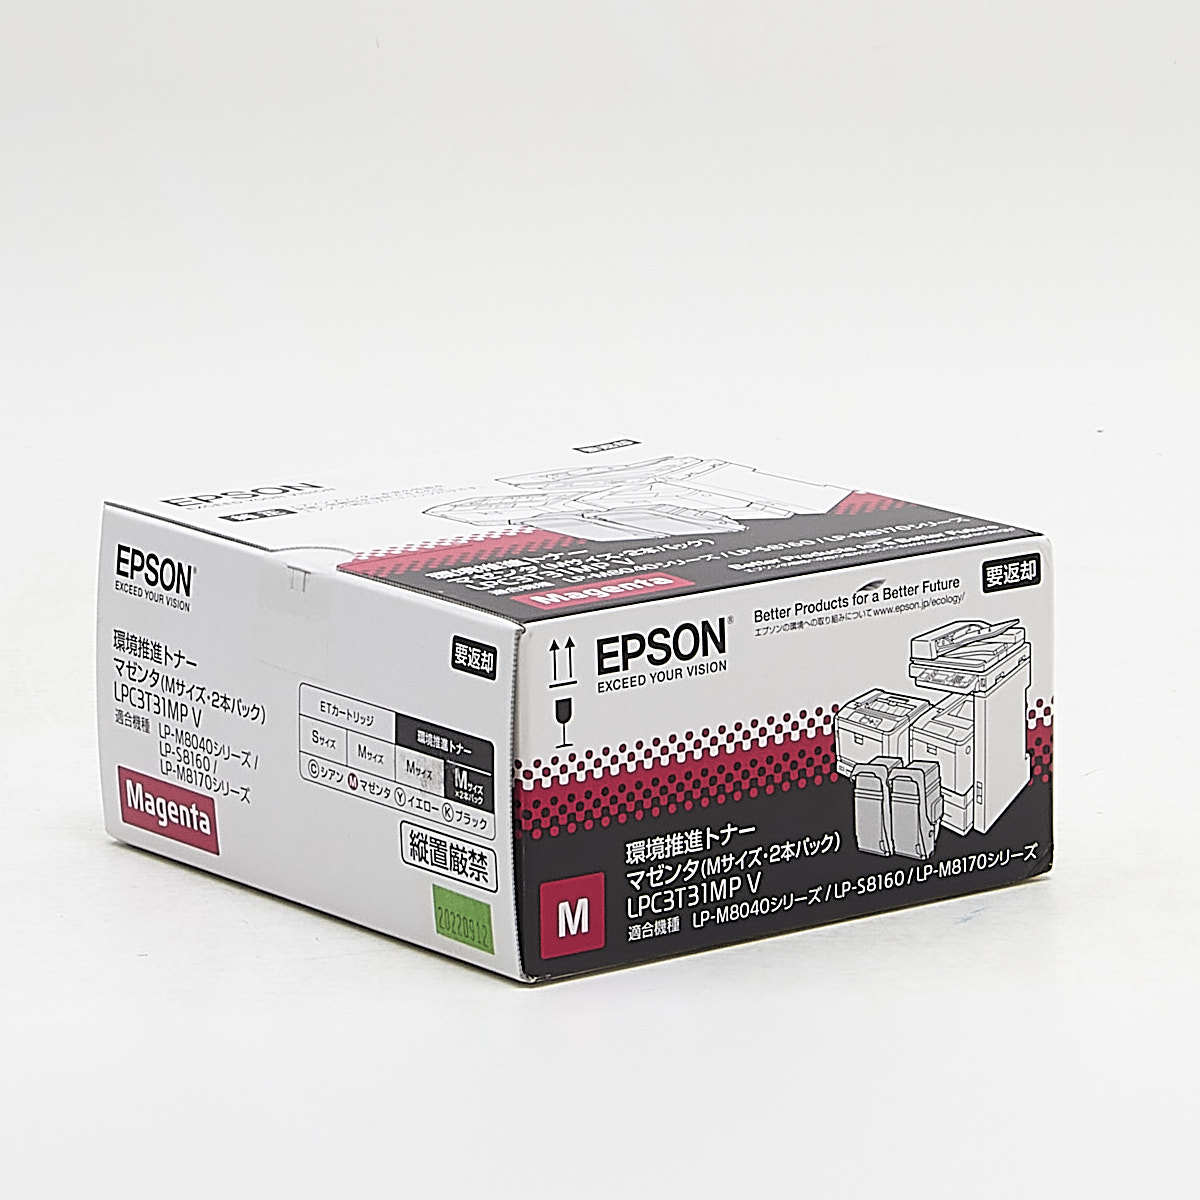 EPSON LPC3T31MPV 環境推進トナー マゼンタ (Mサイズ2本パック) 純正 適合機種 LP-M8040シリーズ/LP-S8160/LP-M8170シリーズ_画像1